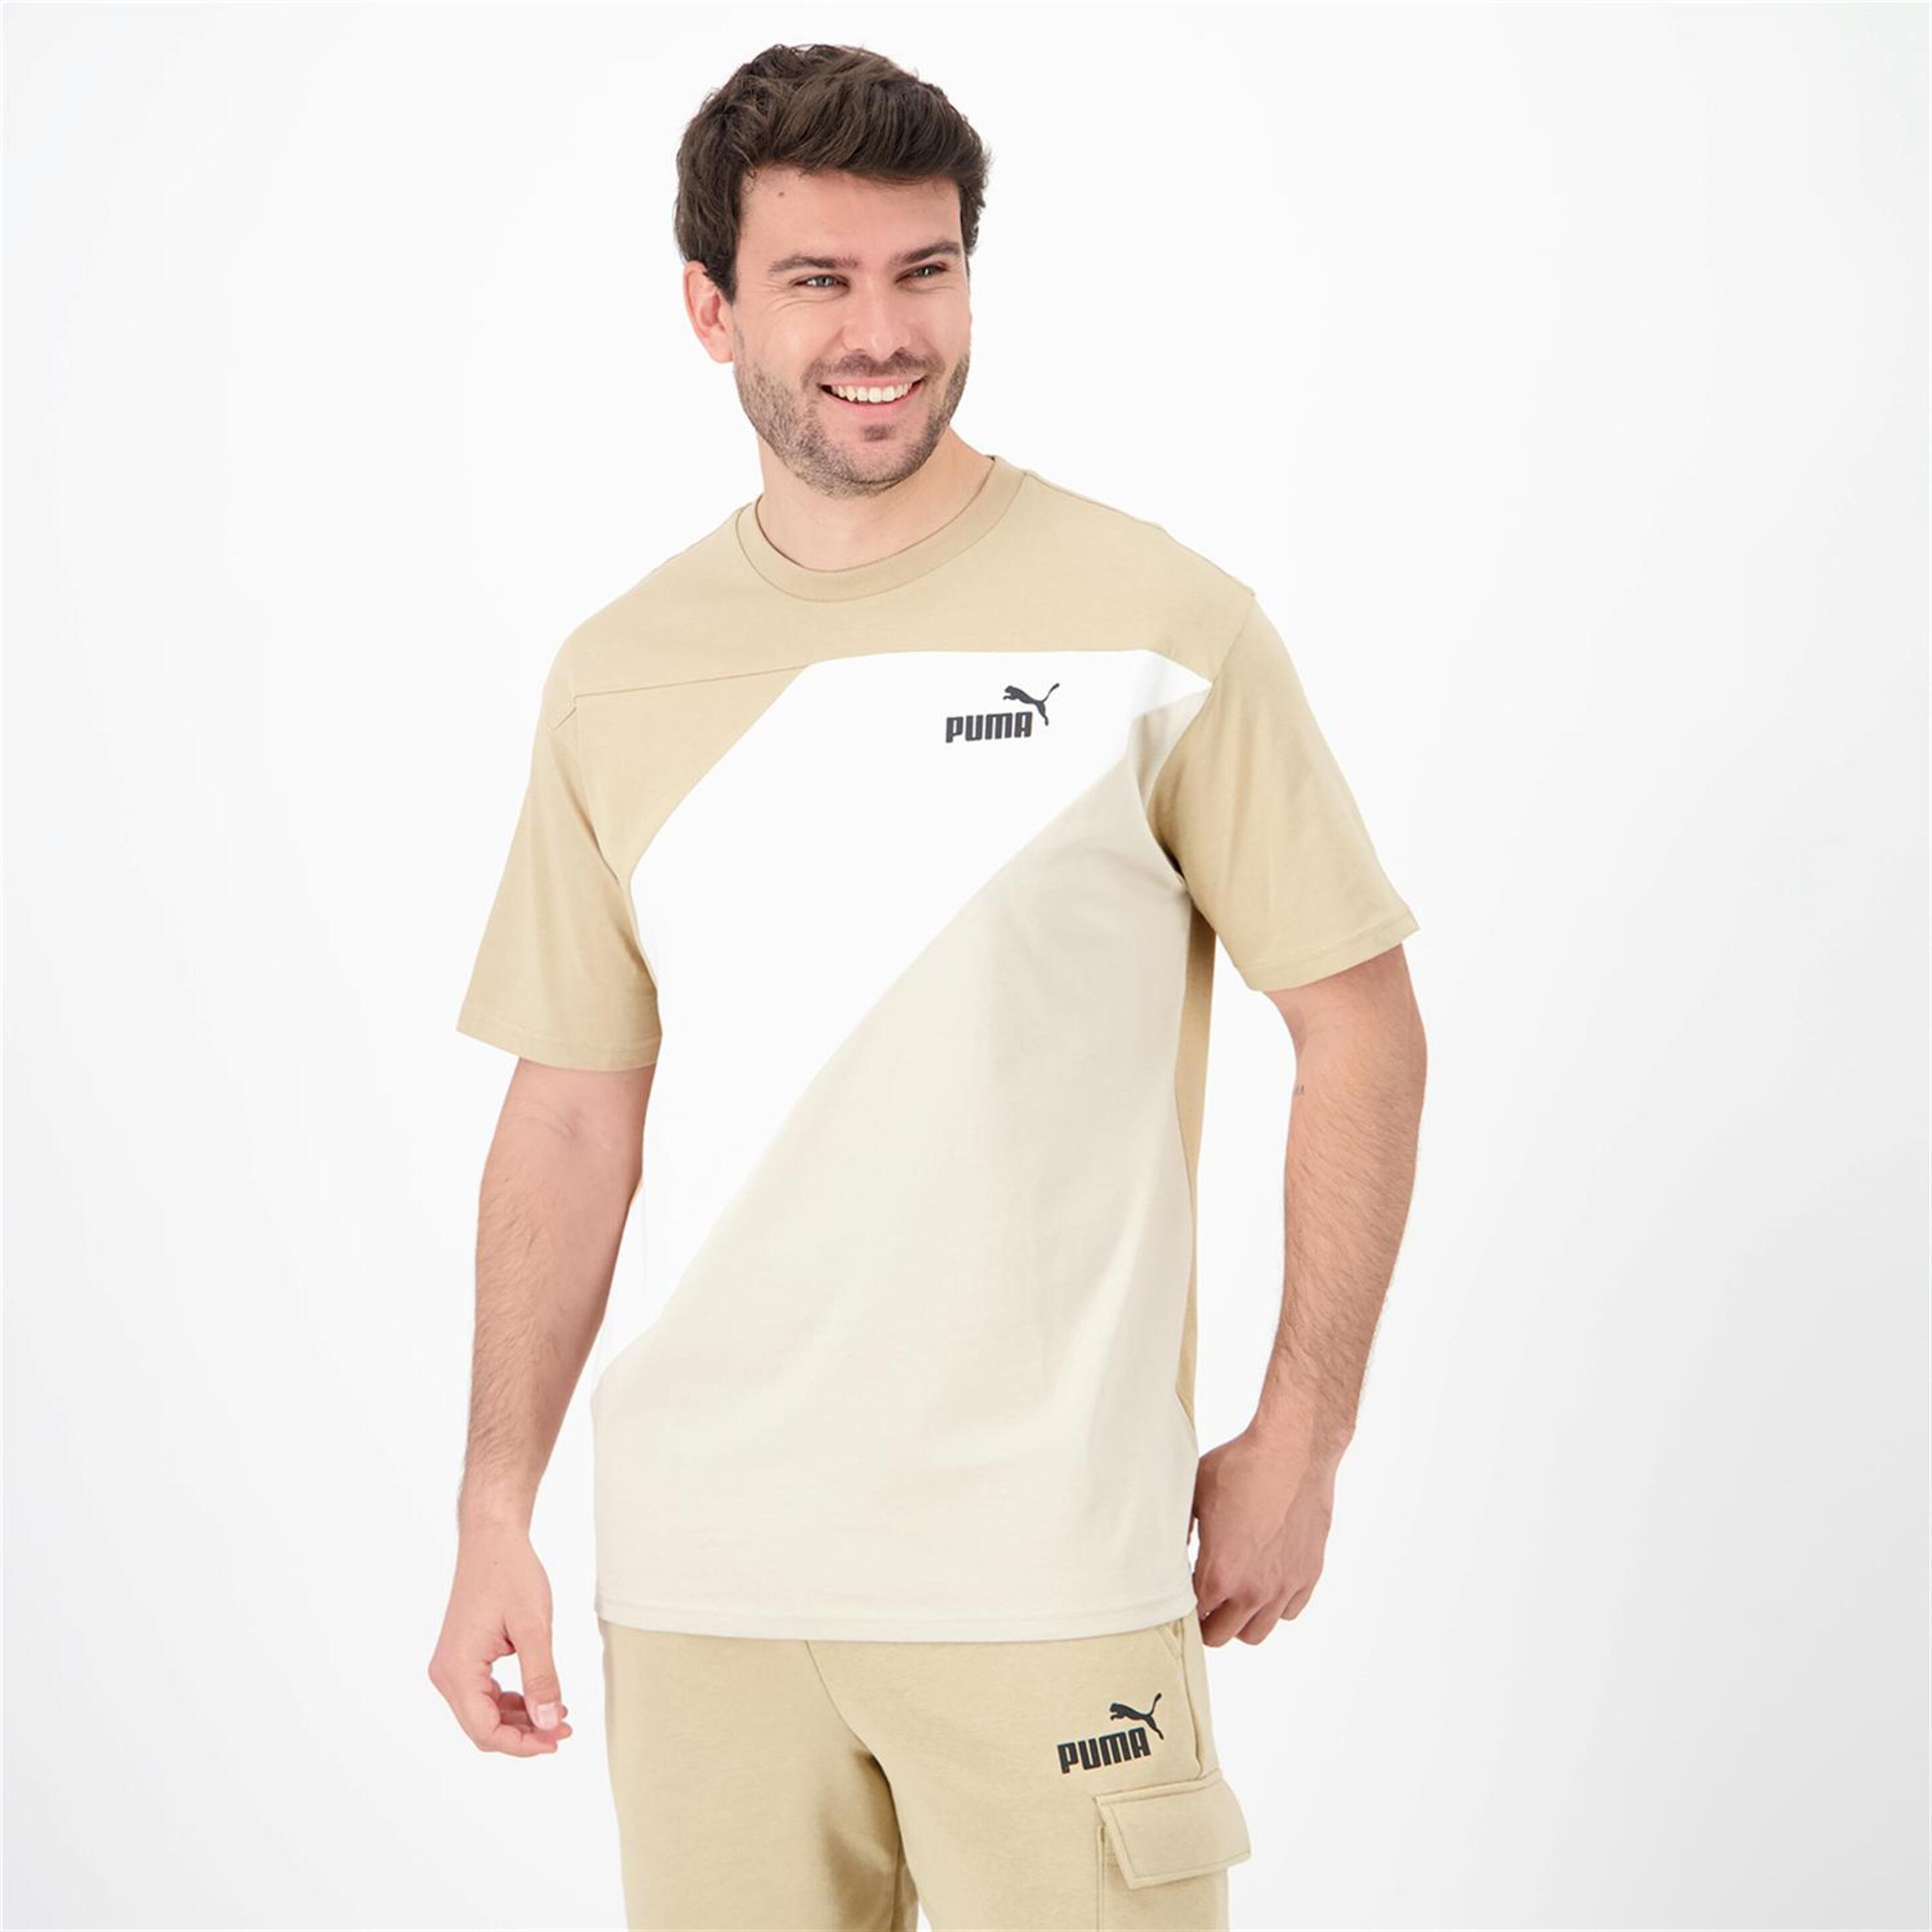 Puma Power Block - marron - Camiseta Hombre